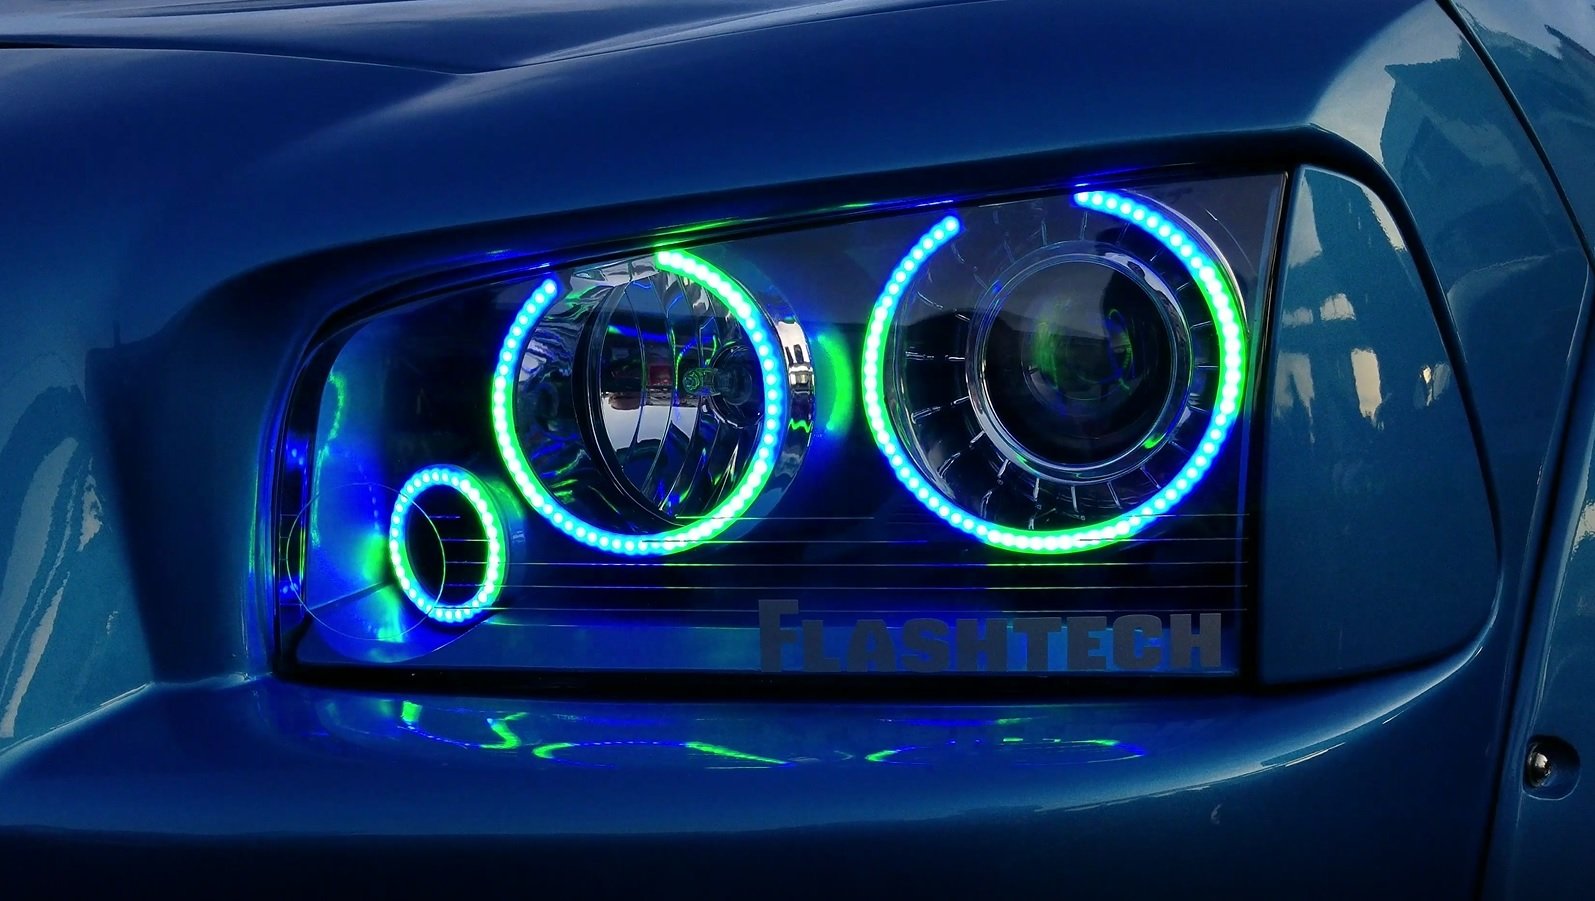 Ford-Fusion-2010, 2011, 2012-LED-Halo-Headlights-ColorChase-No Remote-FO-FU1012-CCH